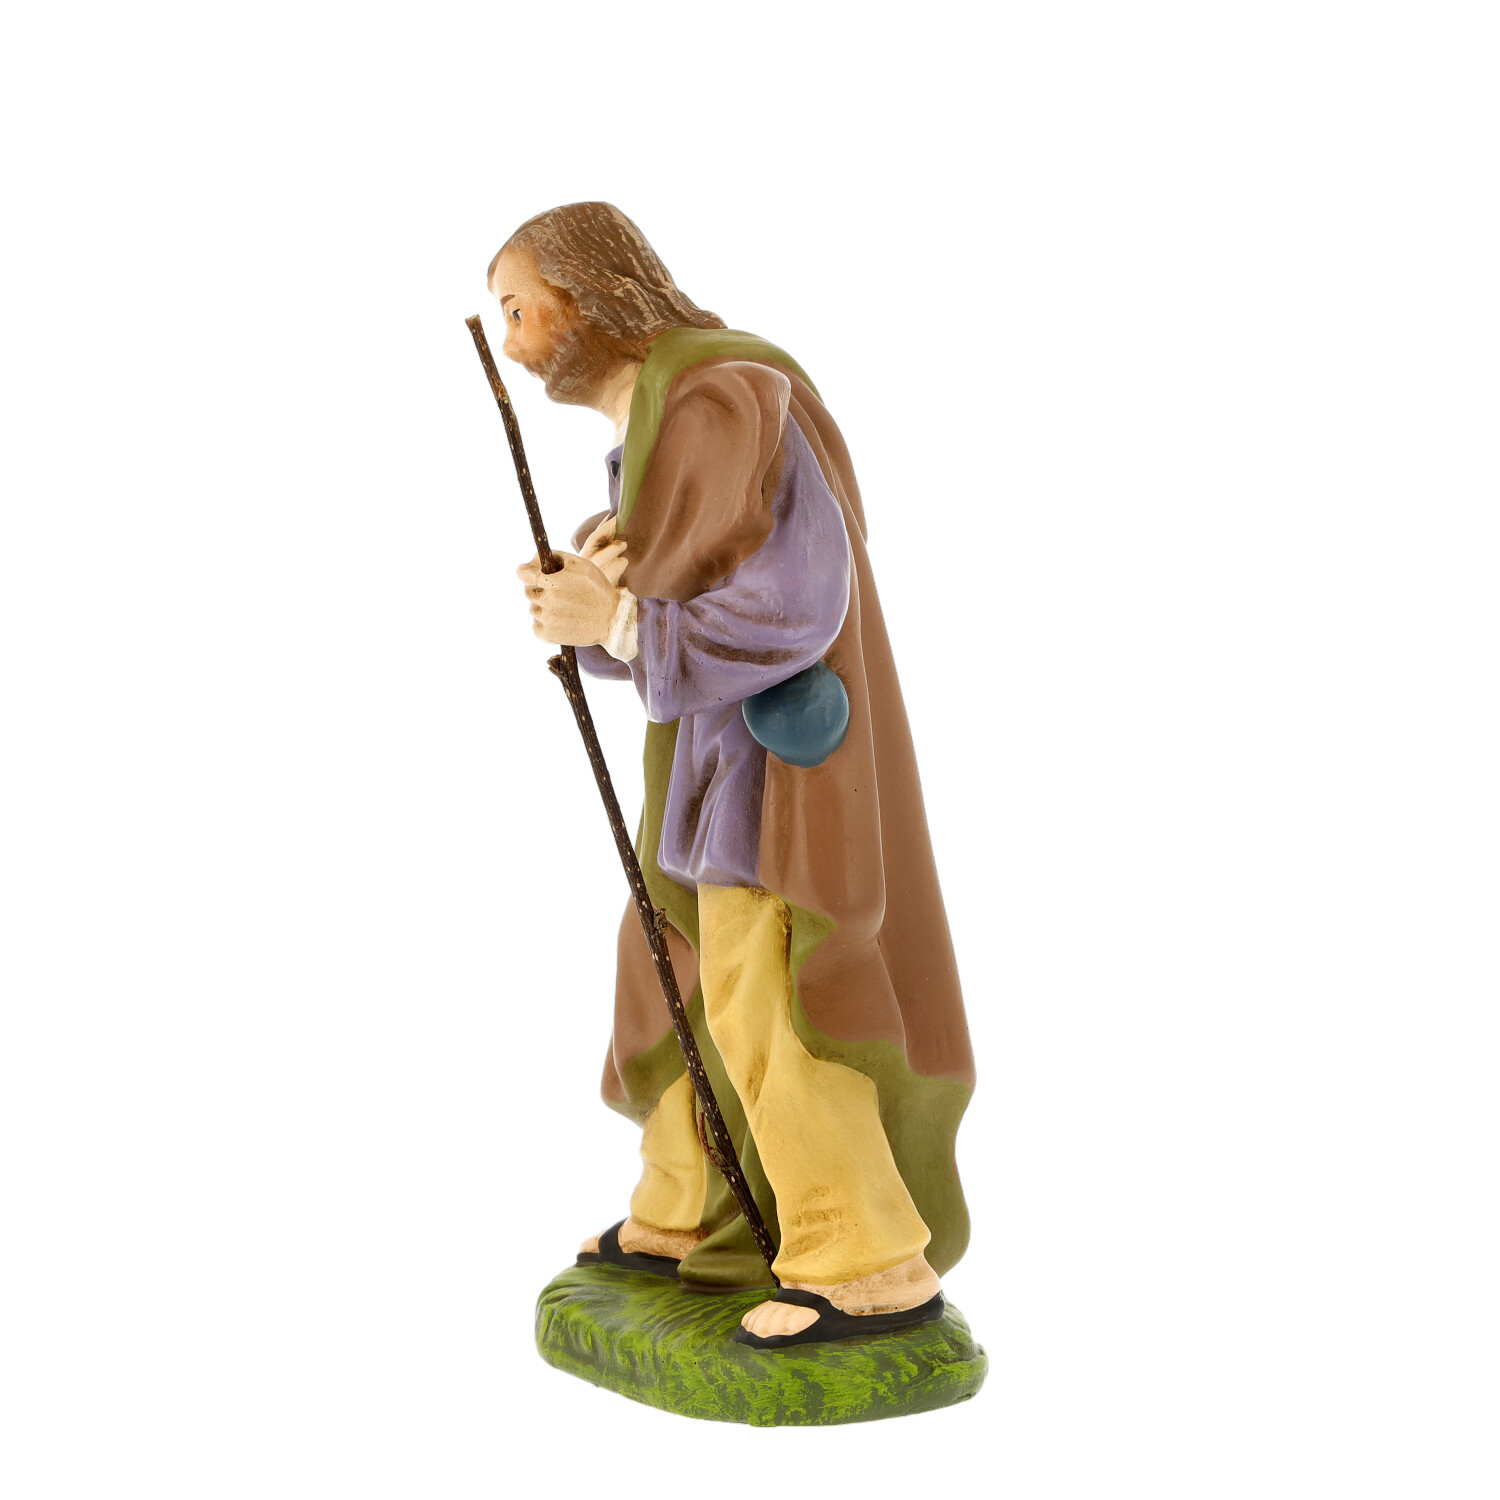 Standing Joseph - Marolin Nativity figure - made in Germany